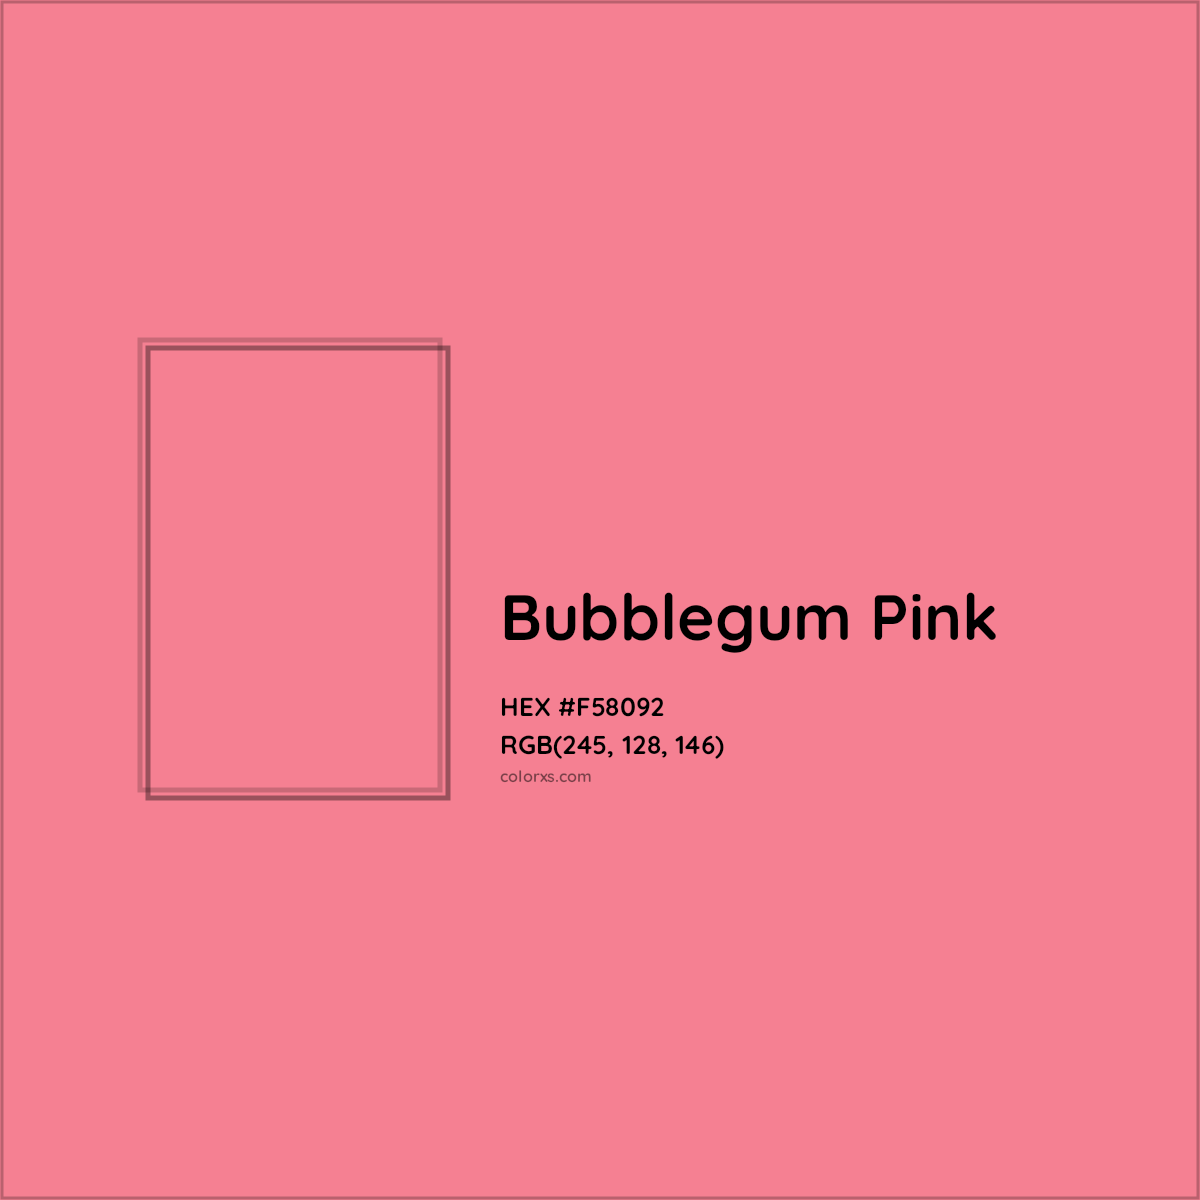 1. Bubblegum Pink Ombre Nails - wide 7